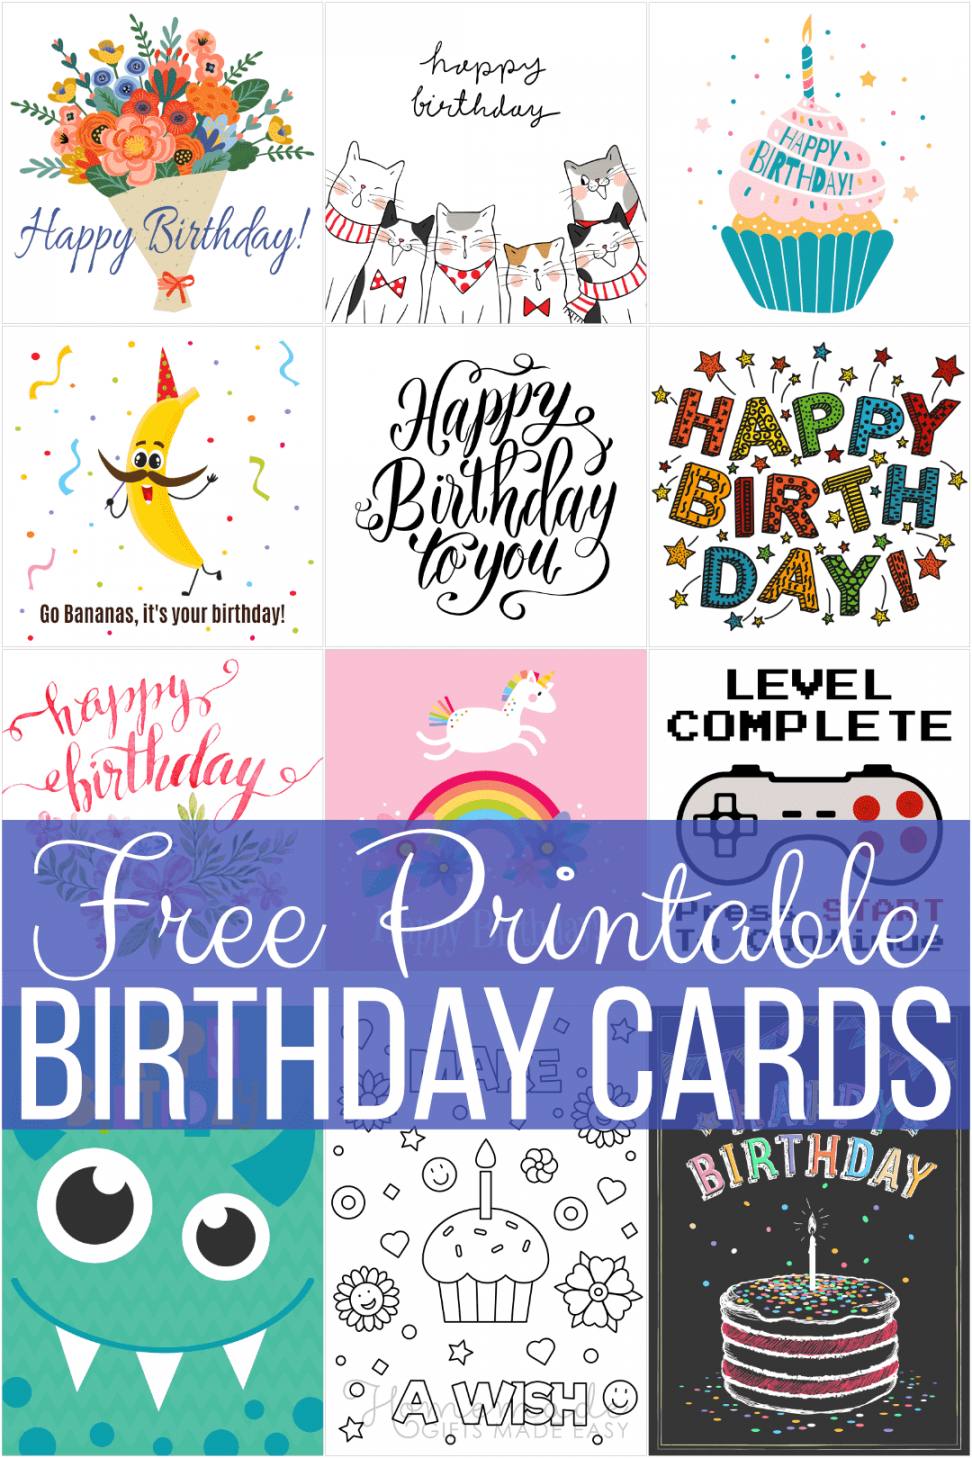 Greeting Cards Free Printable - Printable - Free Printable Birthday Cards for Everyone